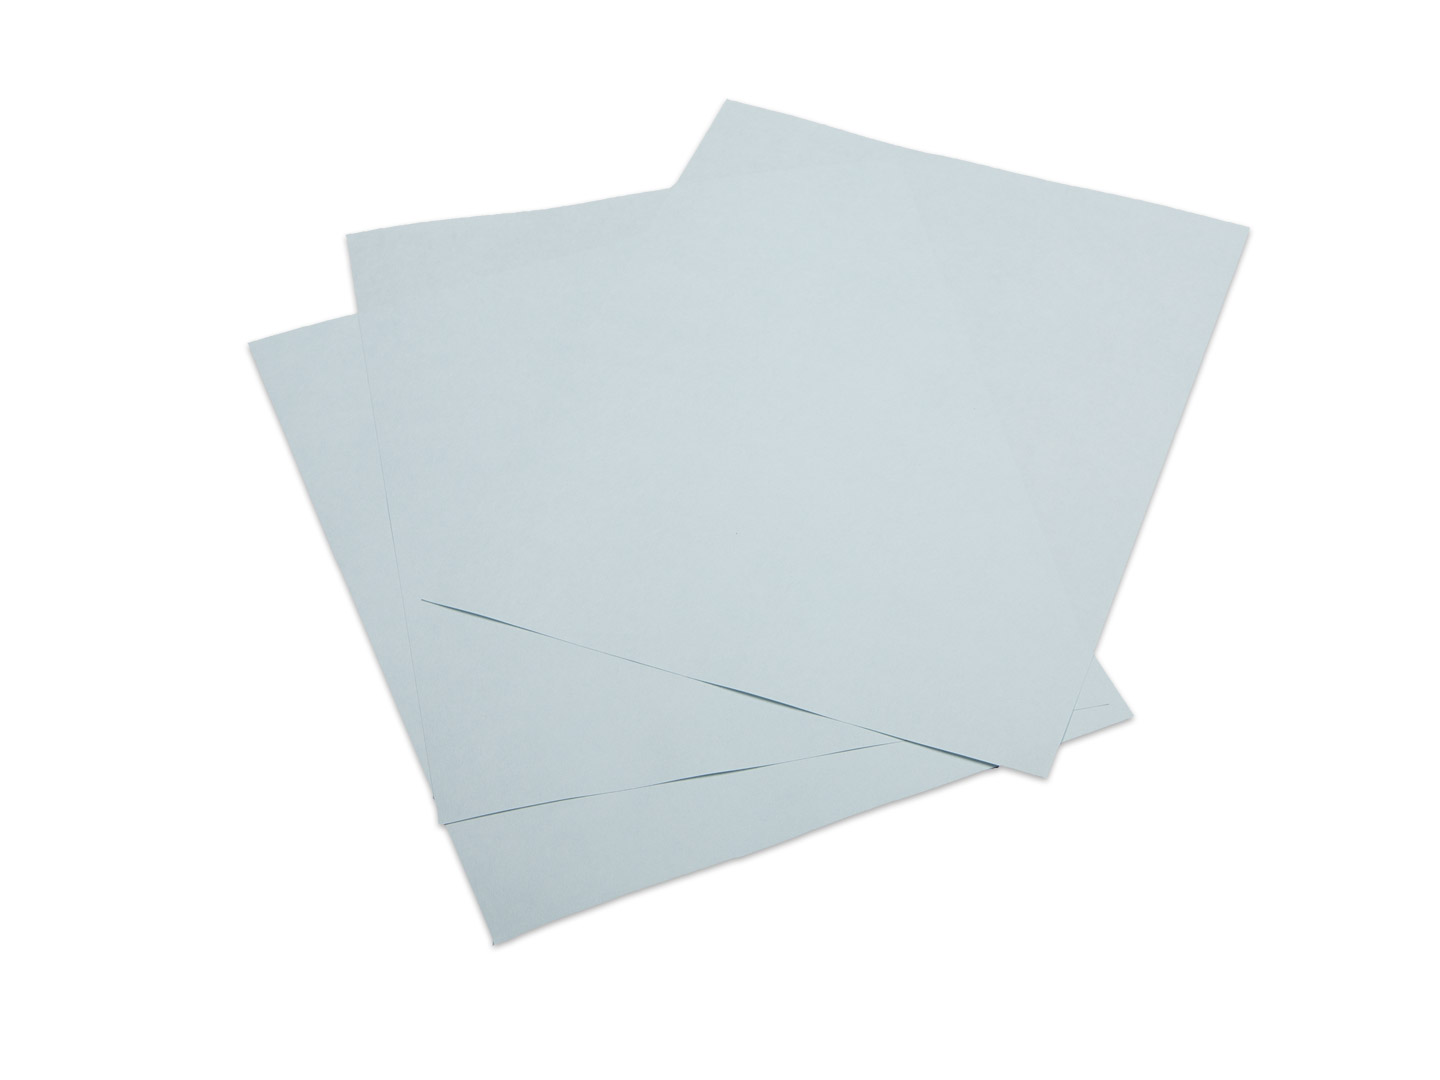 BB10411175BP 11x17 Cleanroom Paper - Berkshire Corporation